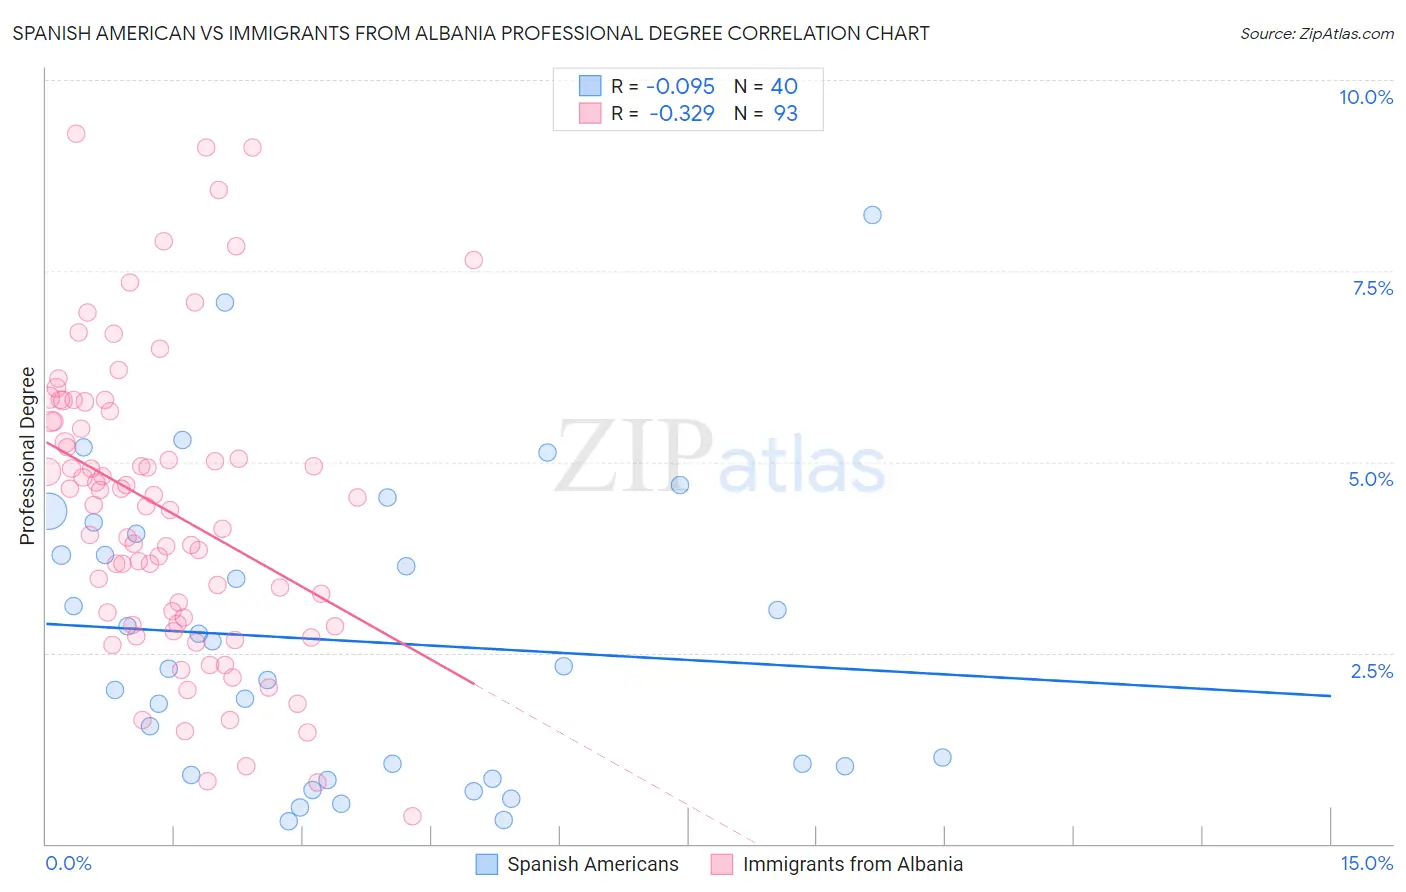 Spanish American vs Immigrants from Albania Professional Degree